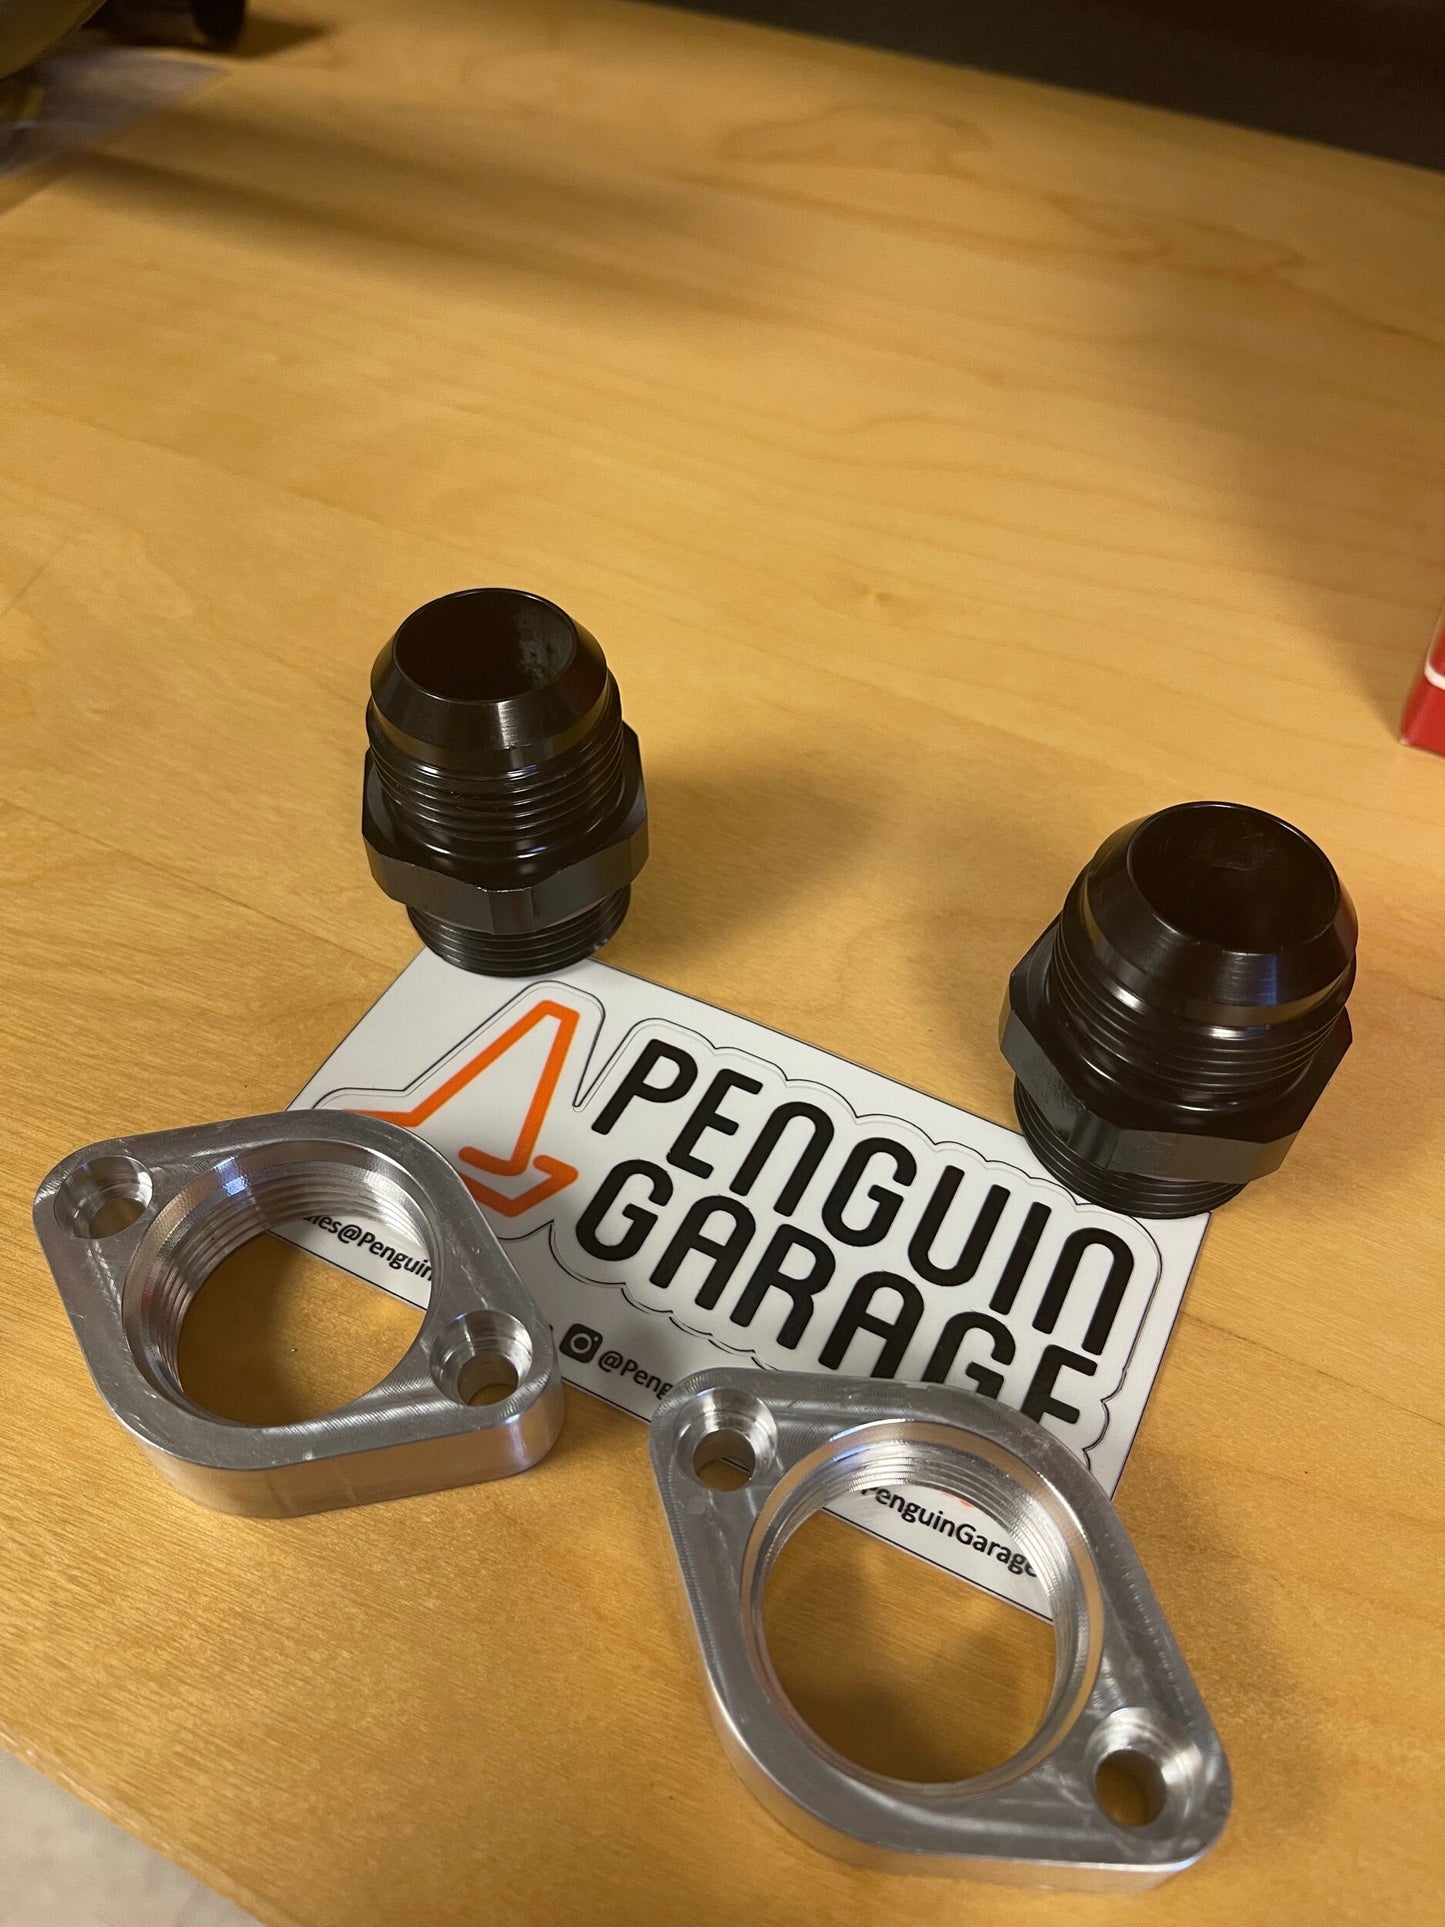 Penguin Garage EJ Coolant Crossover Delete ORB Adapters